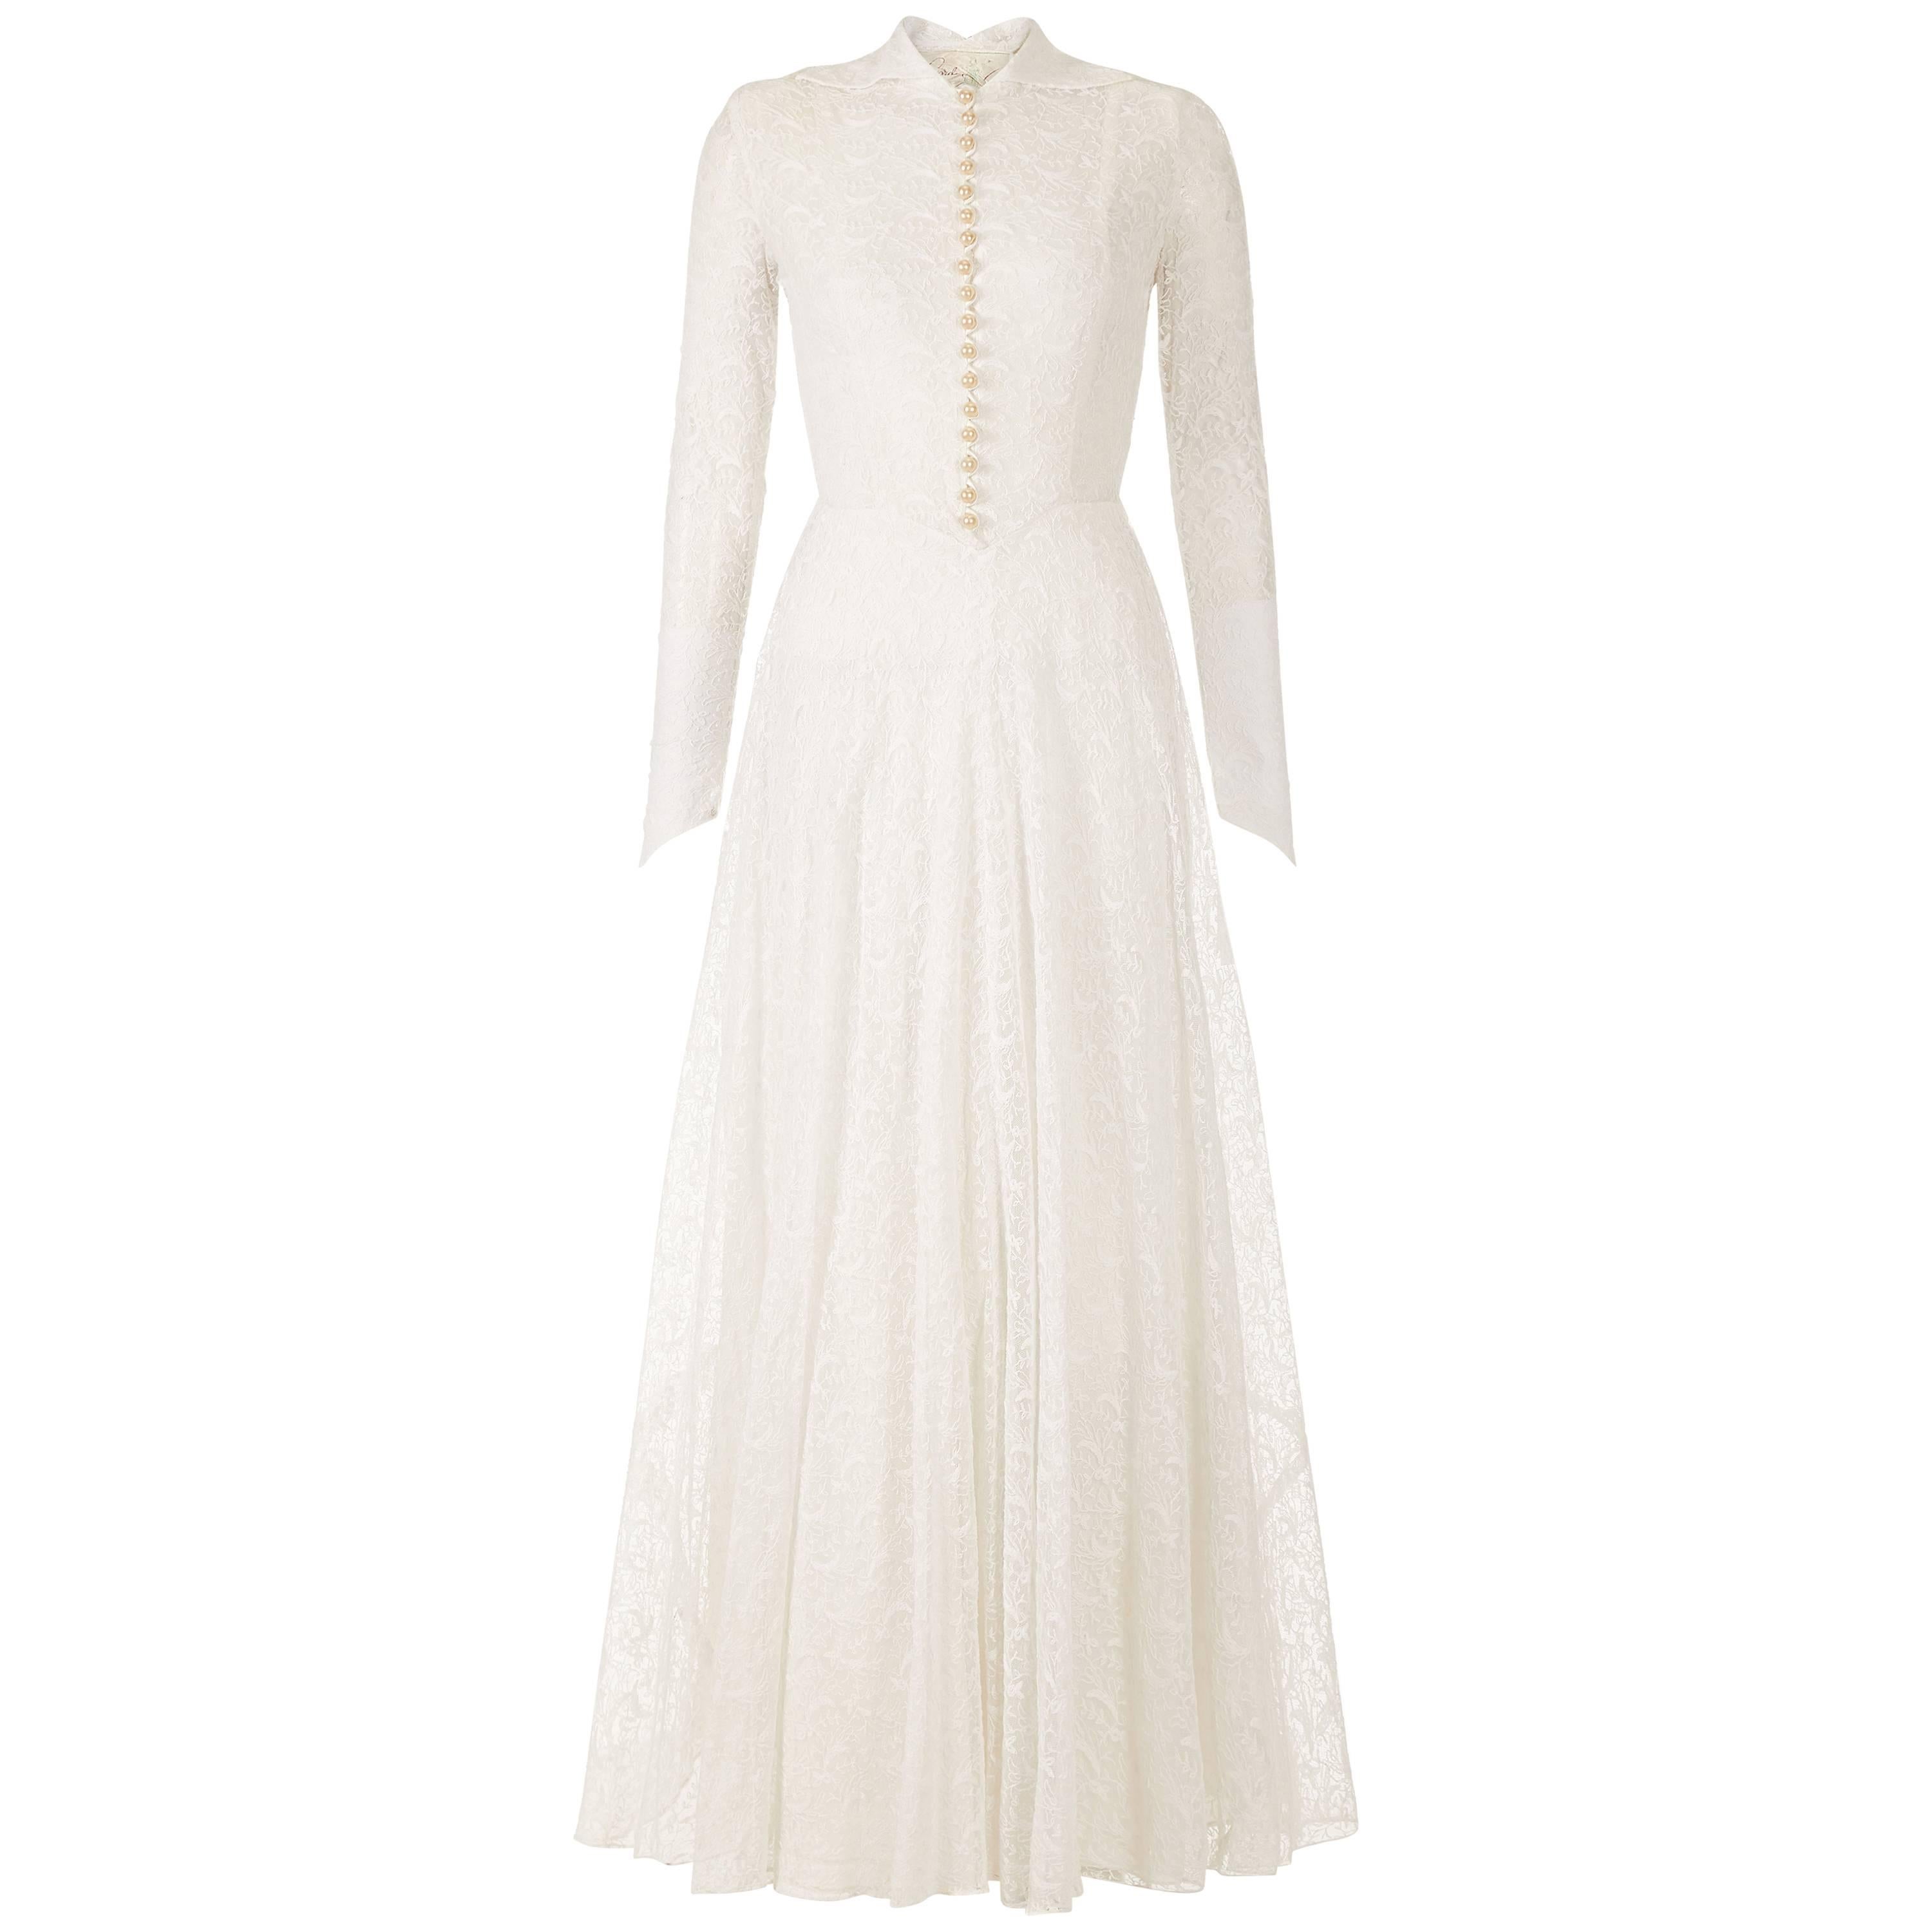 Grace Kelly Style 1950s White Lace Wedding Dress